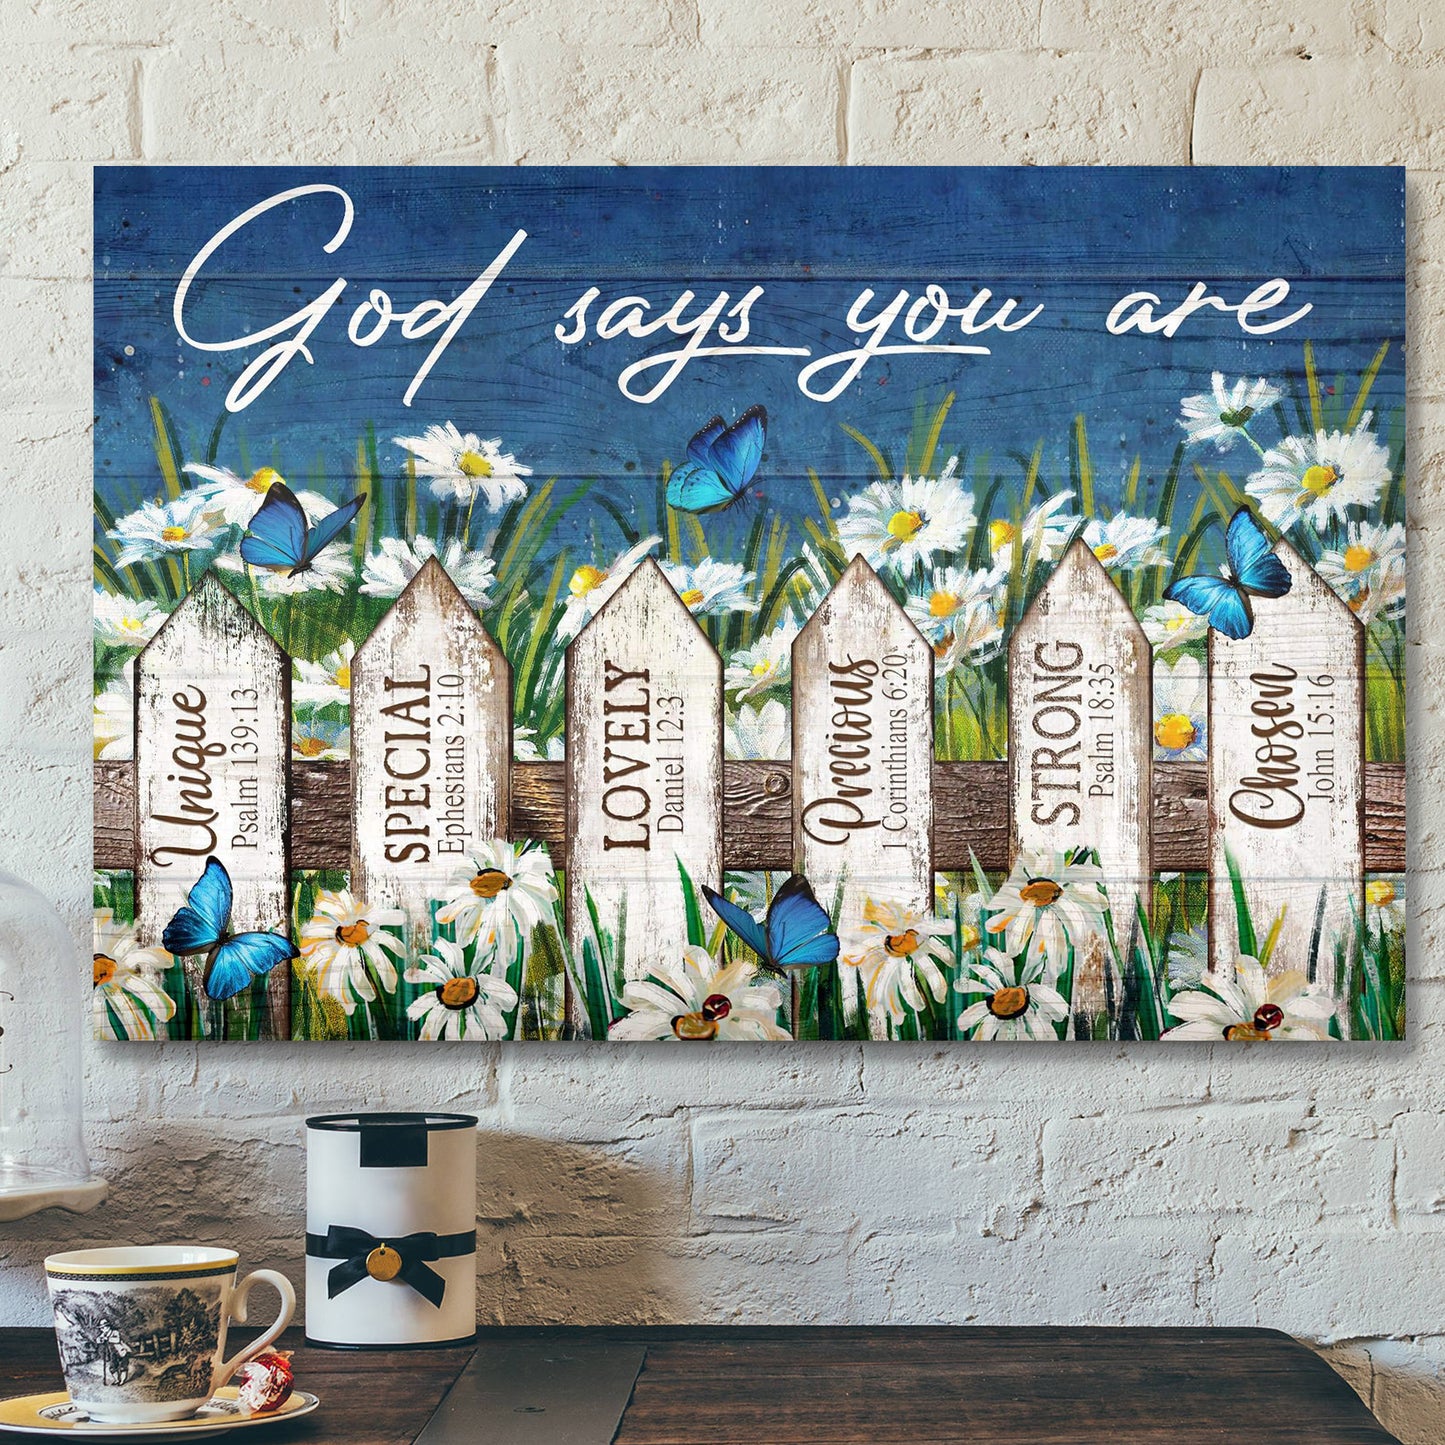 Beautiful Daisy Garden - God Says You Are Canvas Wall Art - Bible Verse Canvas - Scripture Canvas Wall Art - Ciaocustom